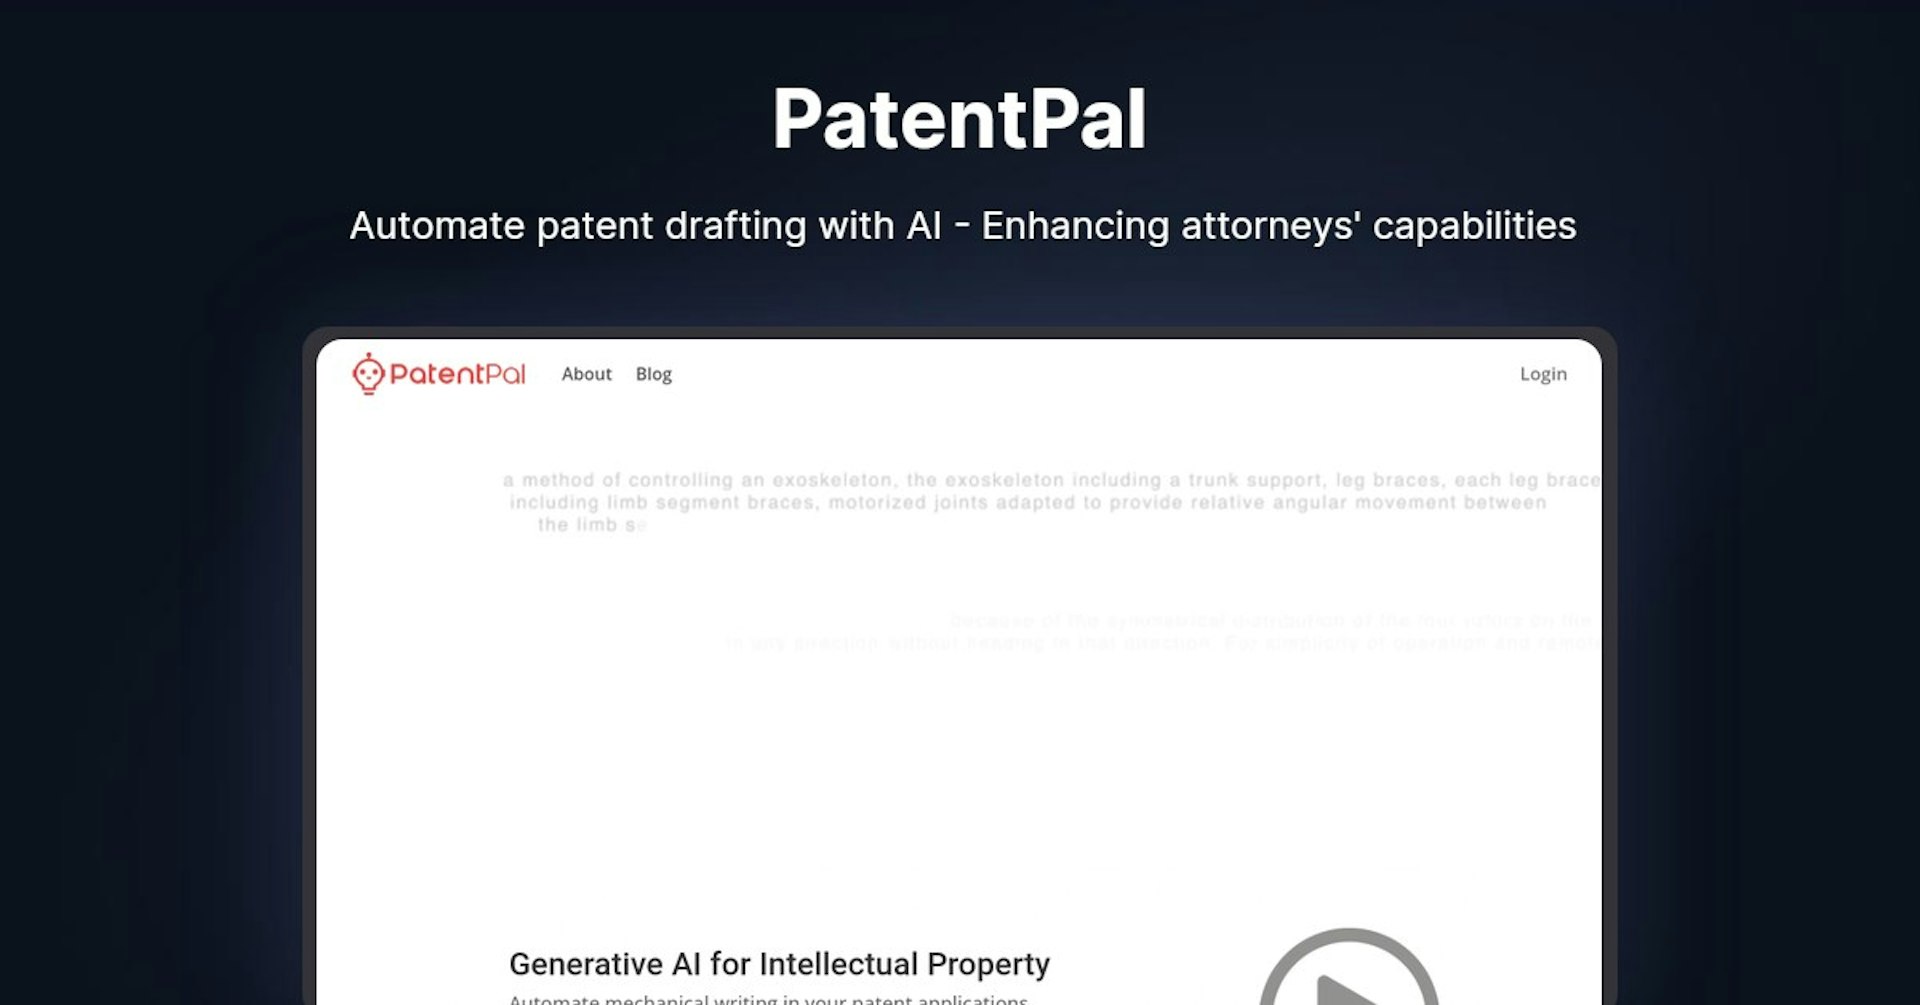 PatentPal